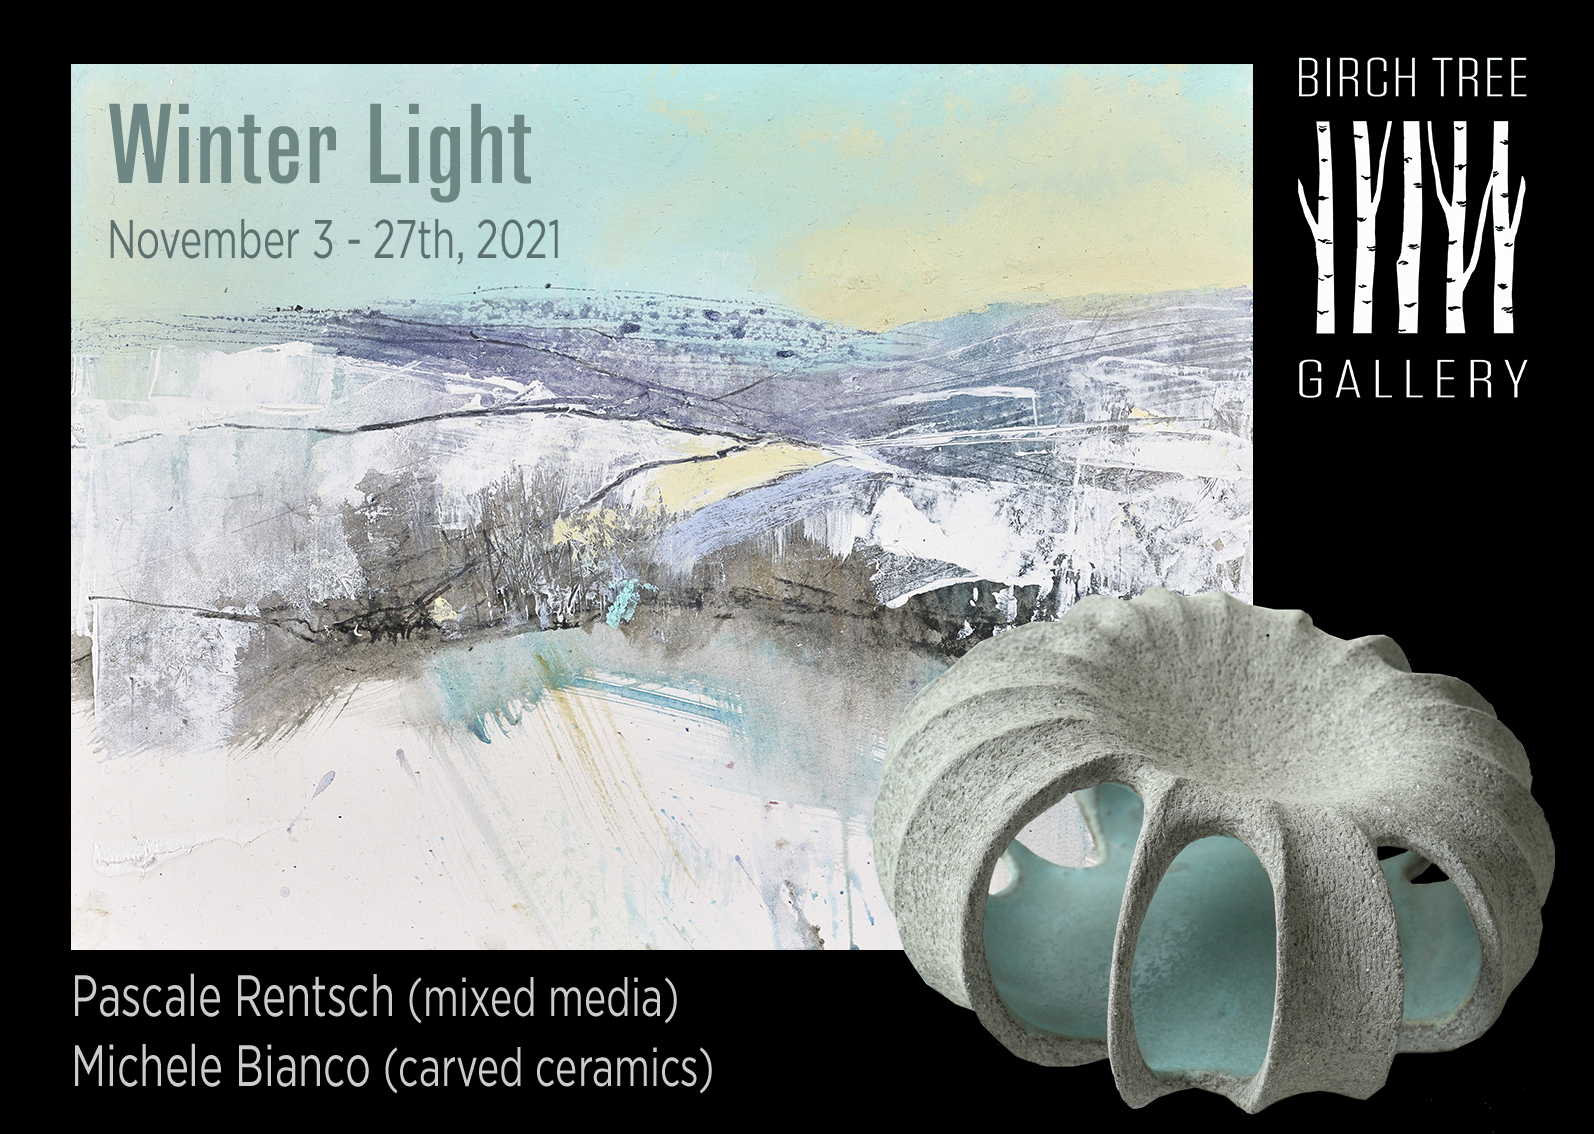 Birch Tree Gallery exhibition 'Winter Light' 2021 November